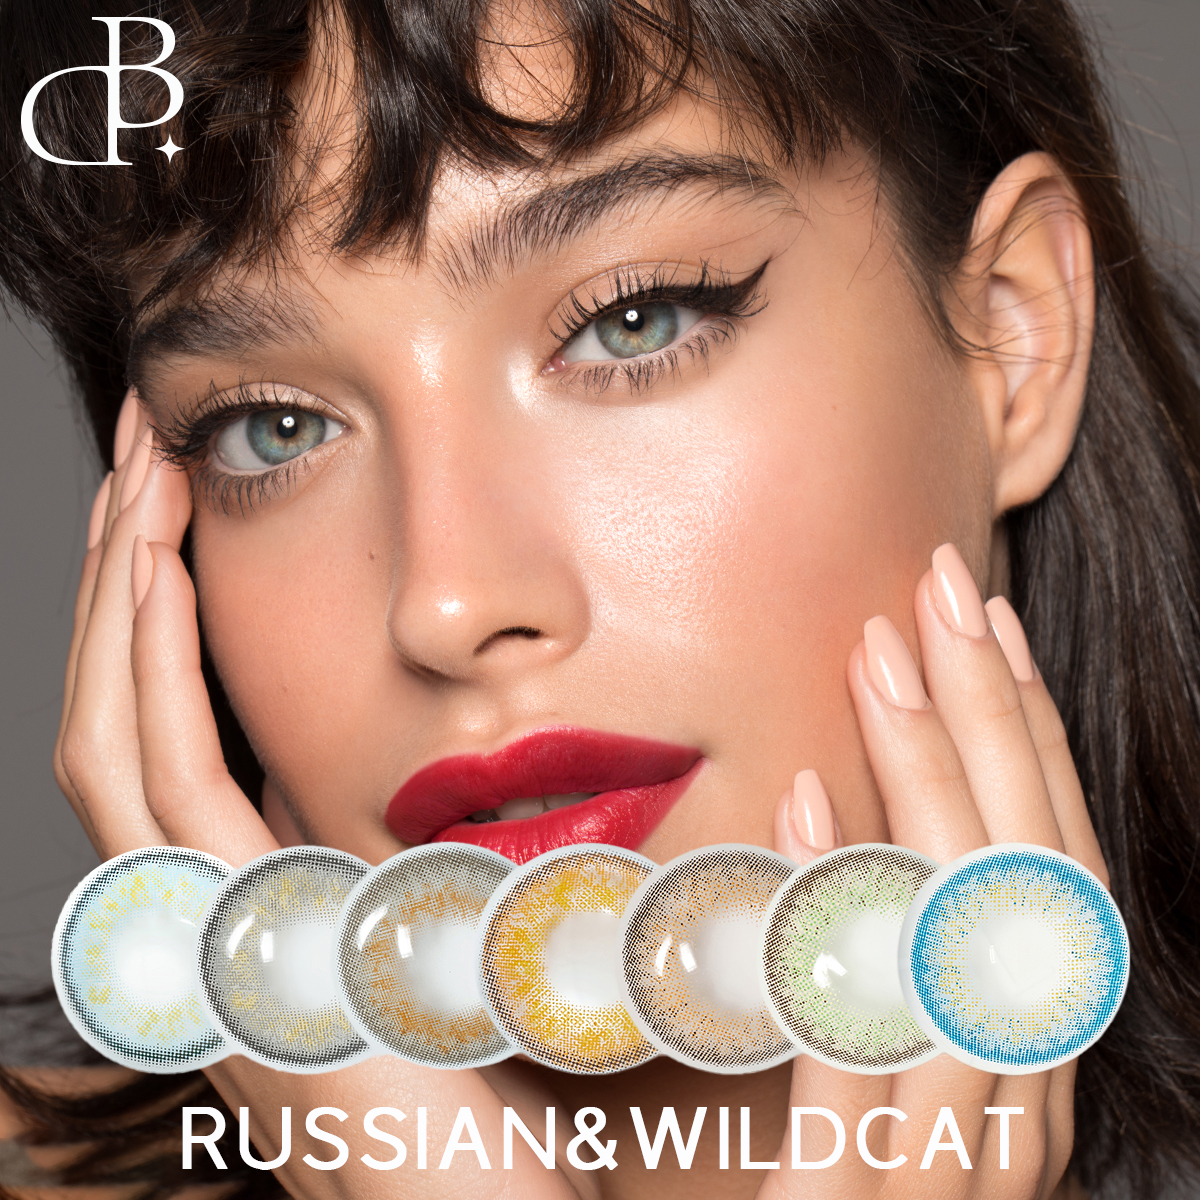 russian&wild-cat 소프트 콘택트렌즈 컬러 1년 공막 눈 렌즈 맞춤형 콘택트렌즈